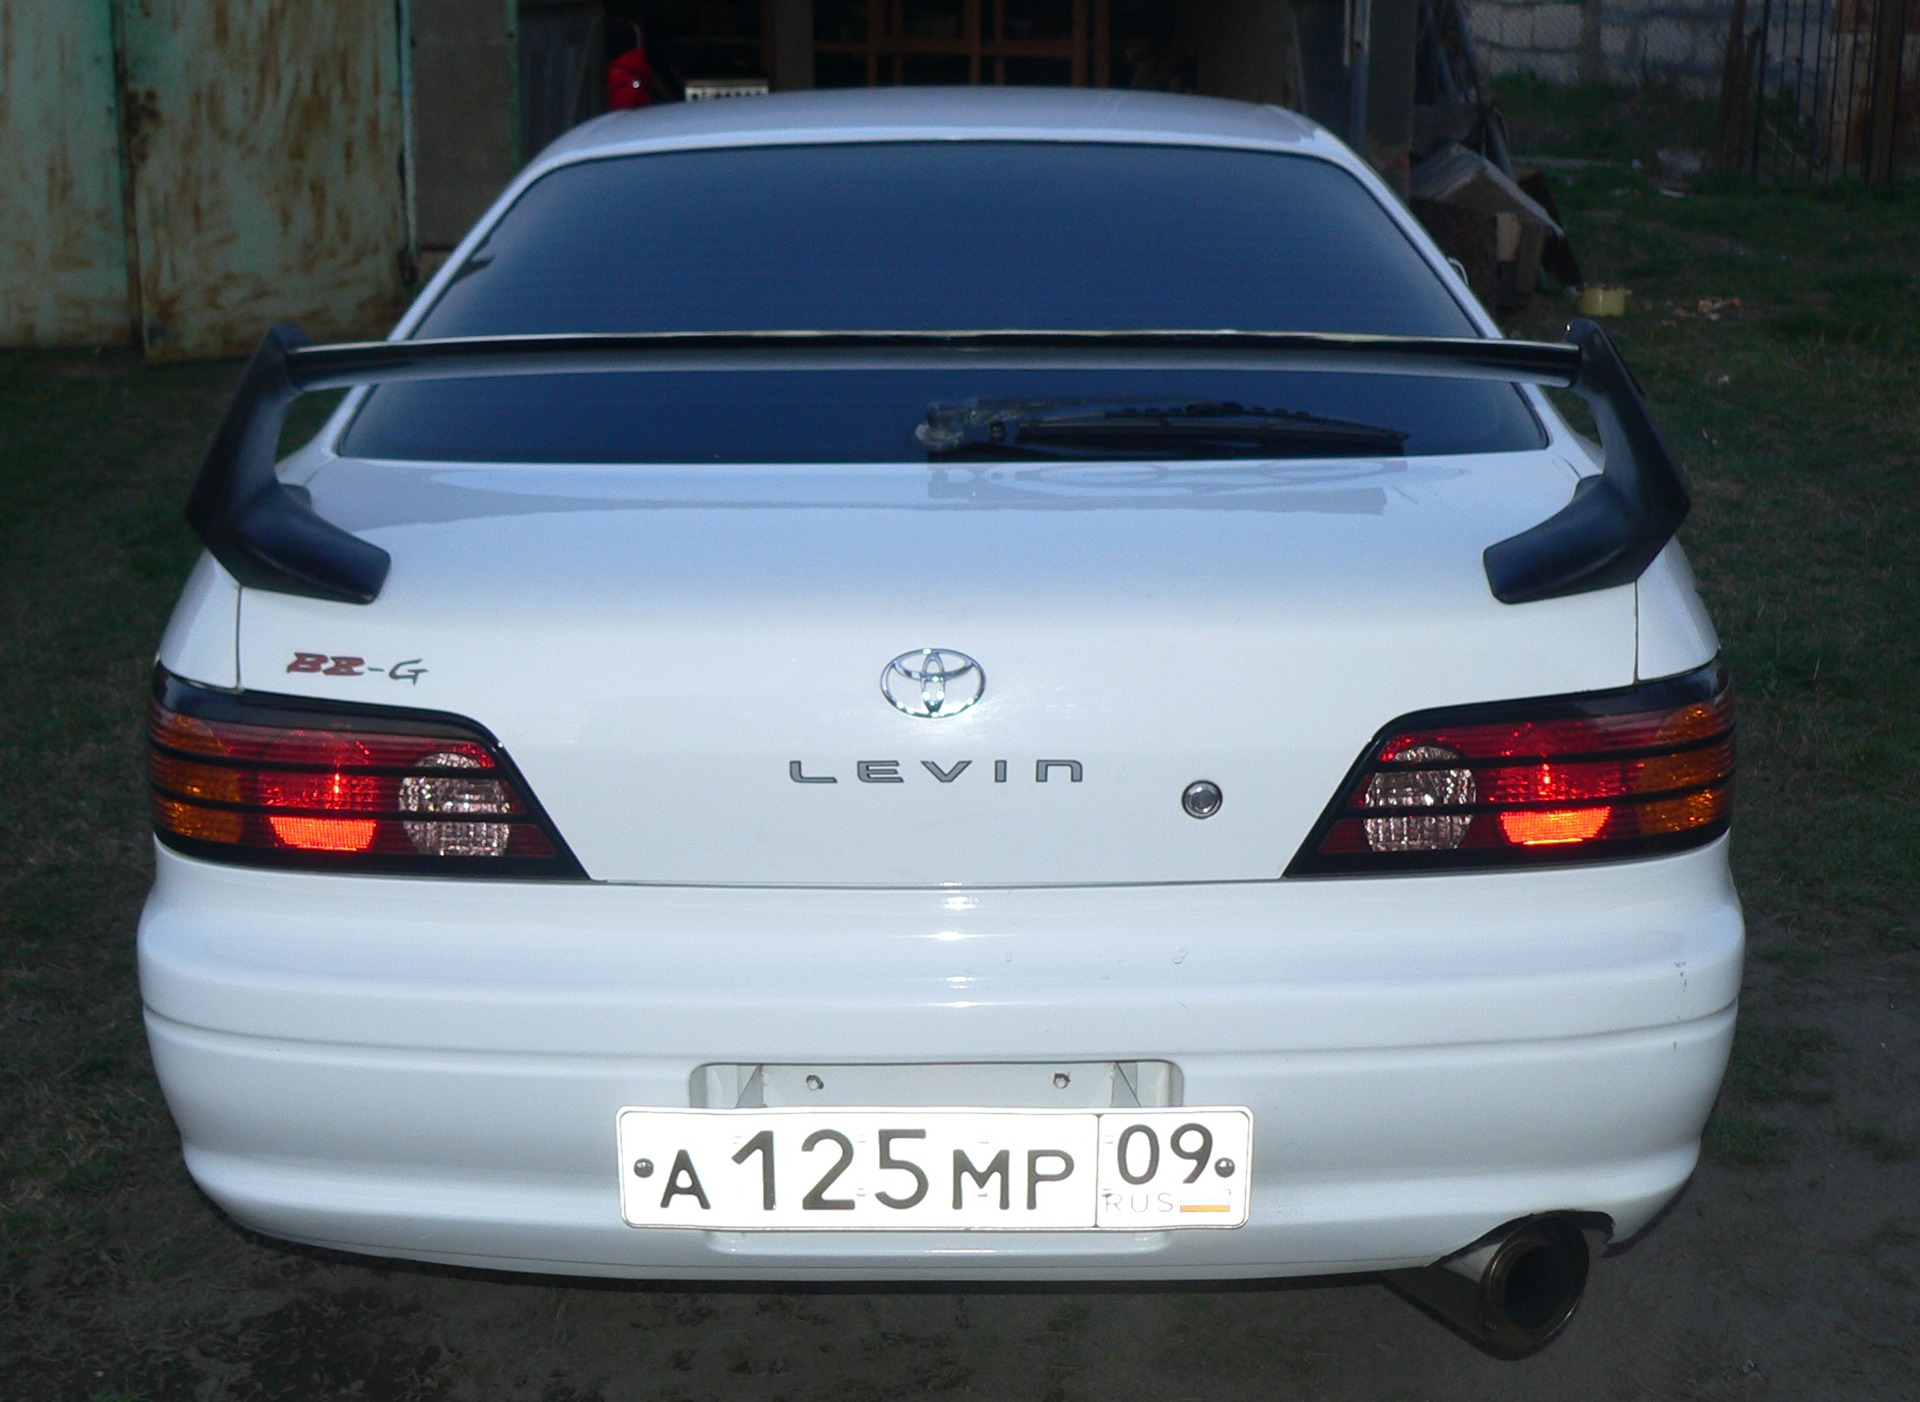 - TRD - Toyota Corolla Levin 16 1999 